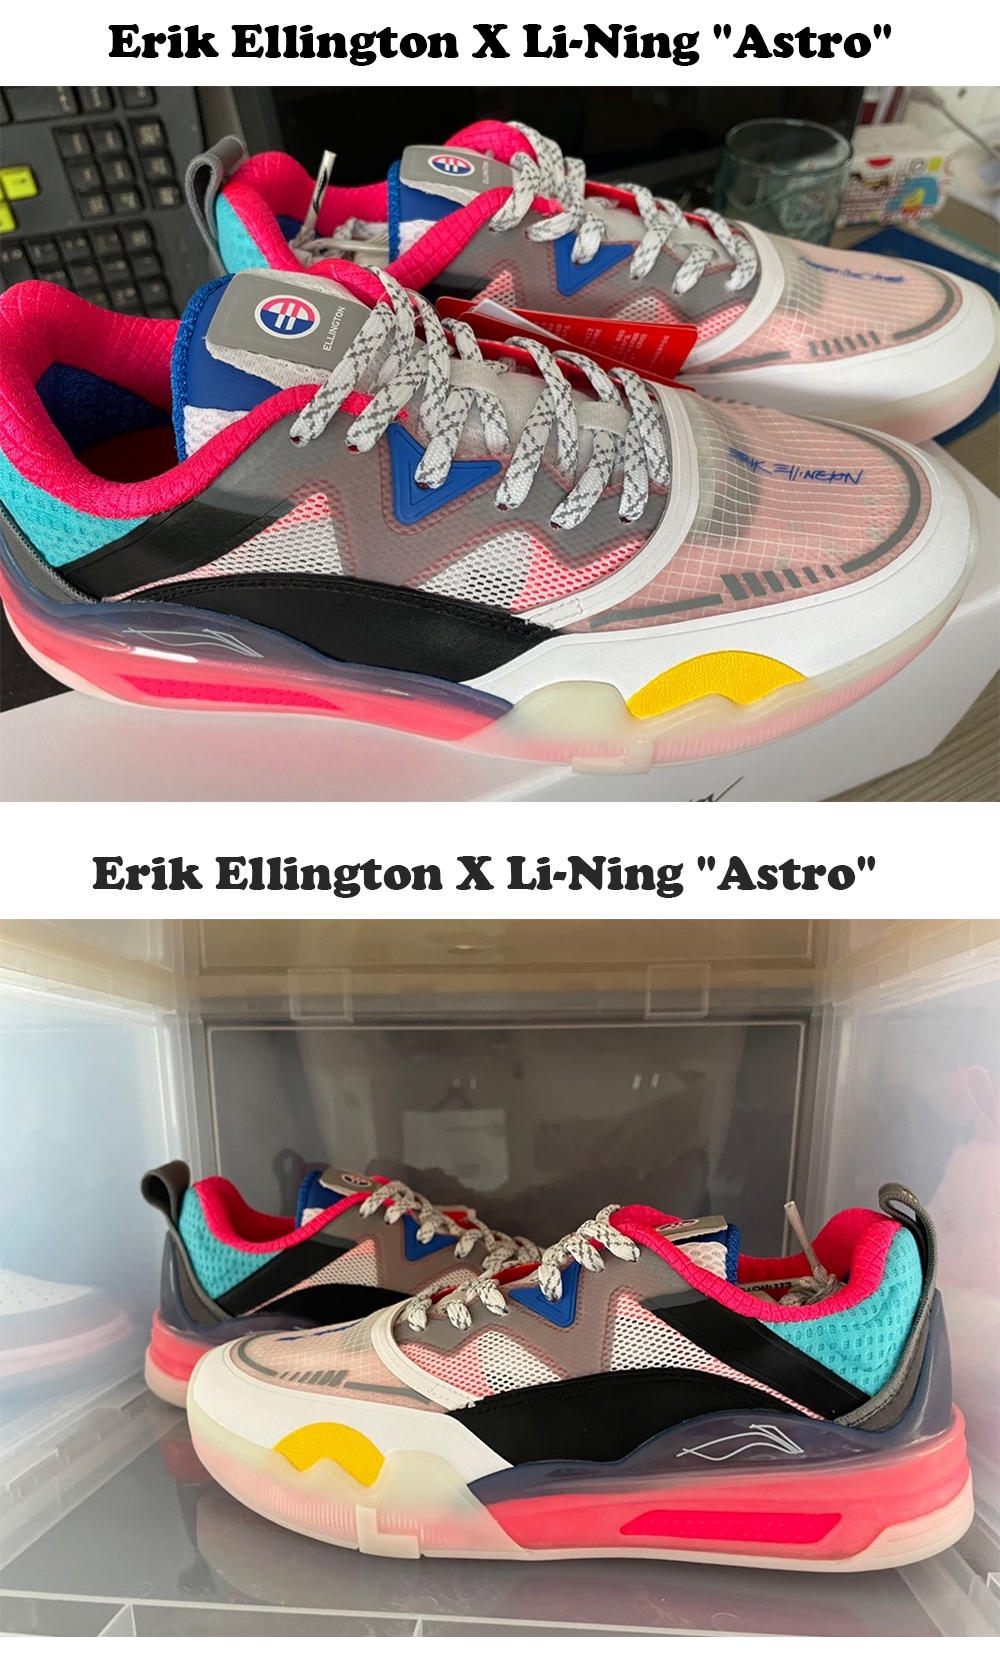 Erik Ellington X Li-Ning "Astro" Professional Skate Signature Shoes 